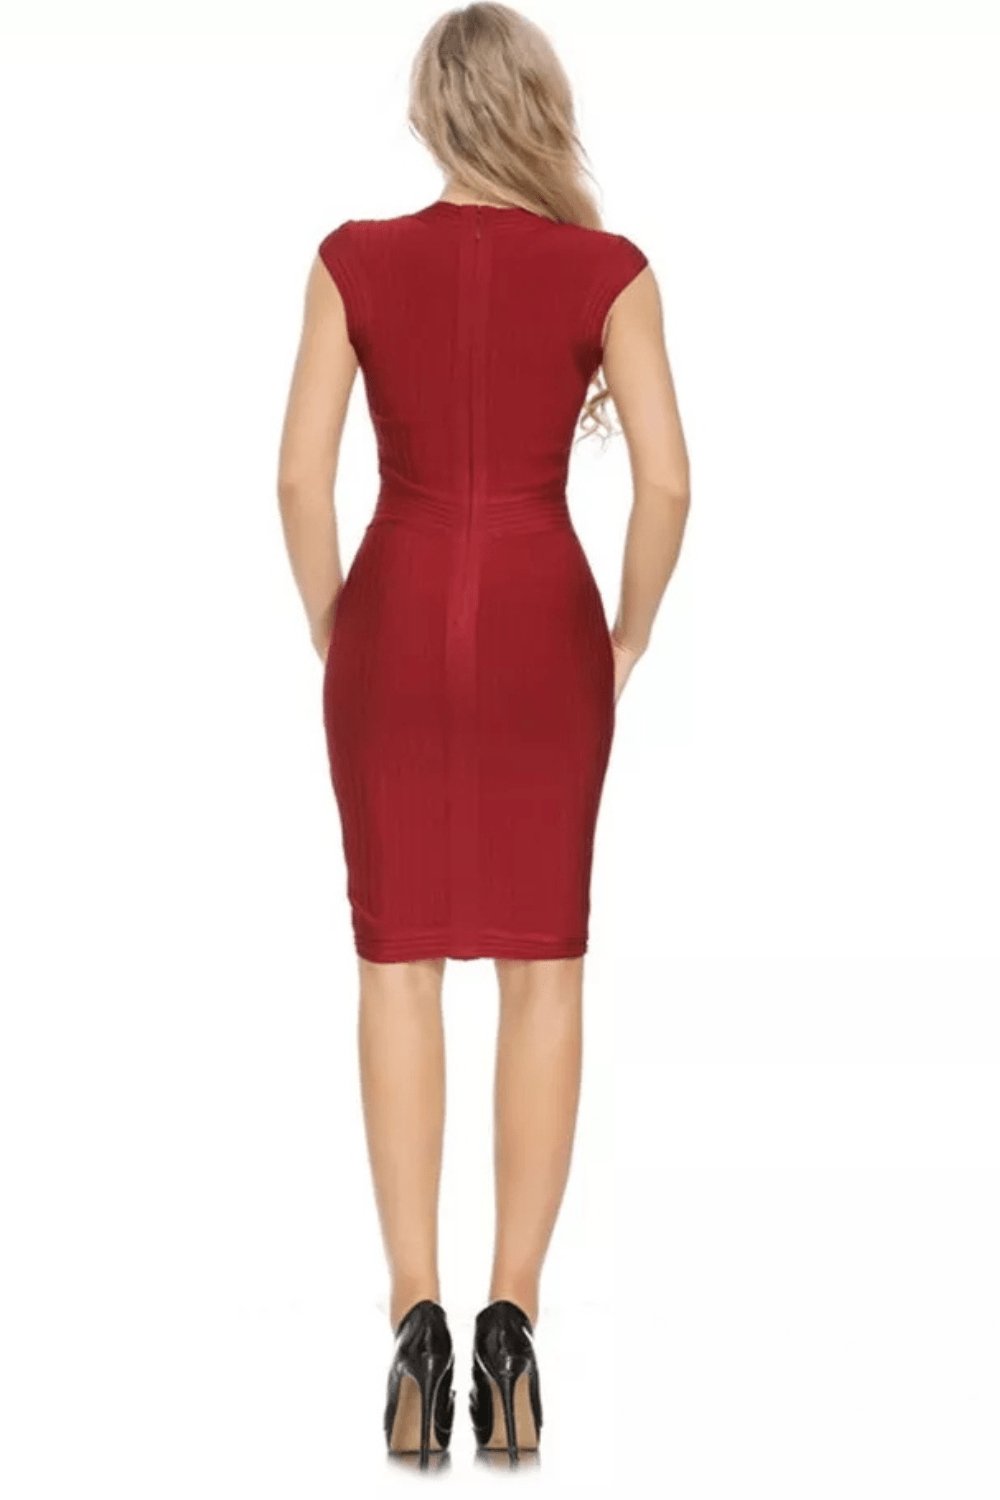 Lily Patchwork Red Bodycon Mini Dress - TGC Boutique - Bodycon Dress